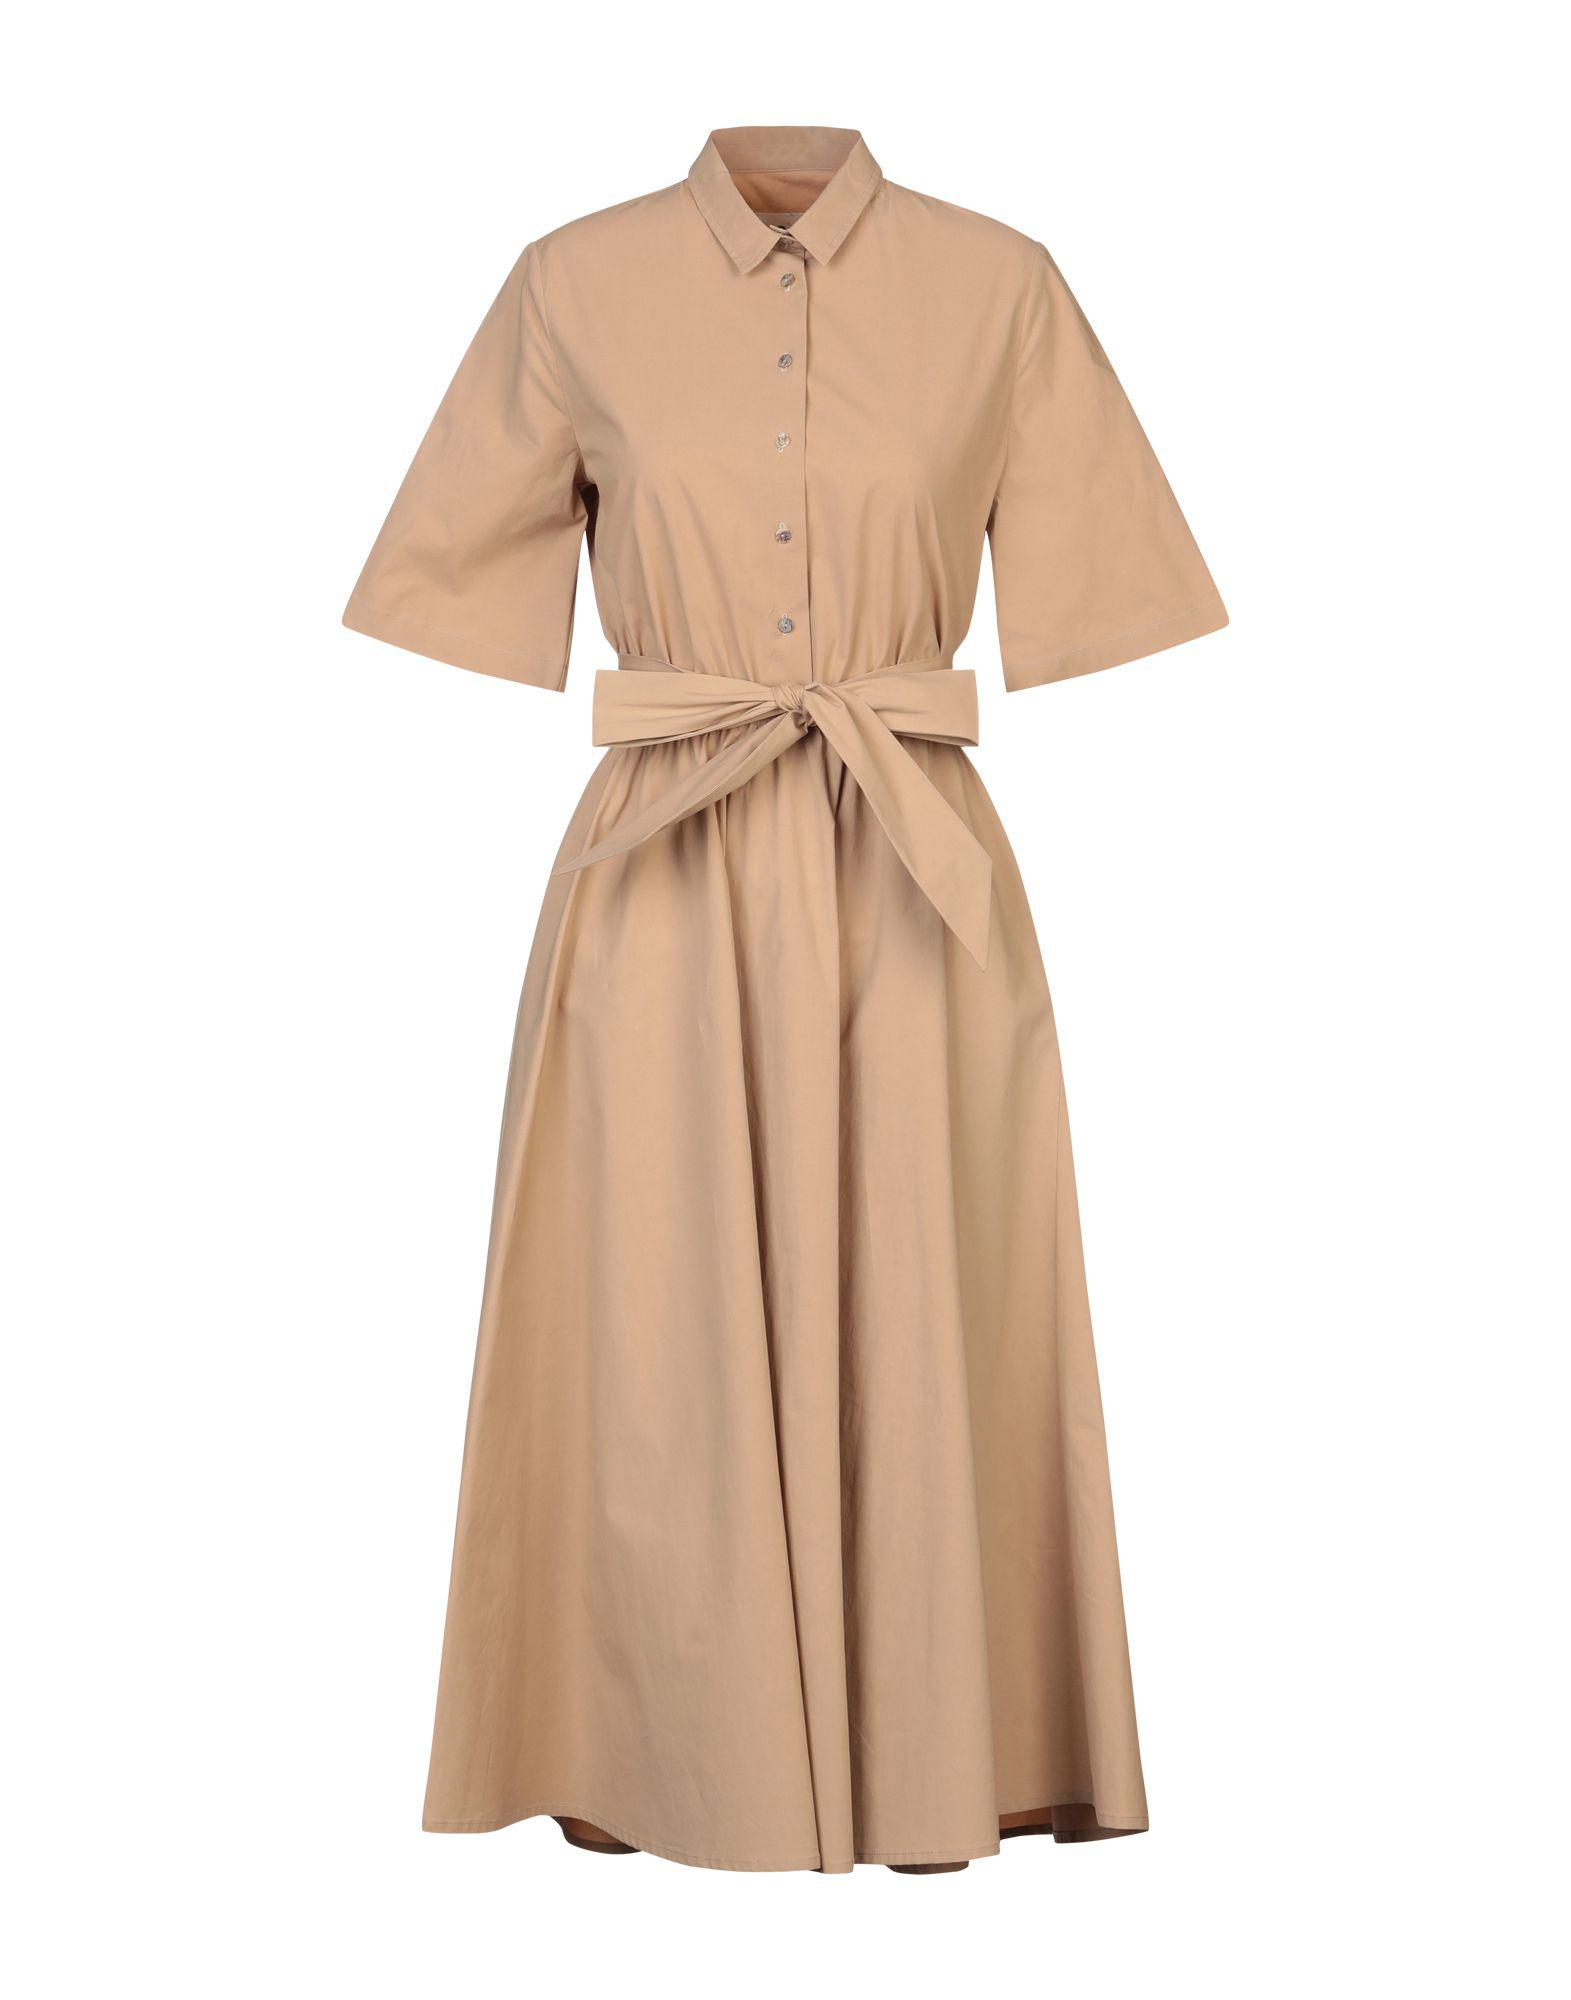 Niu Cotton 3/4 Length Dress in Beige (Natural) - Lyst